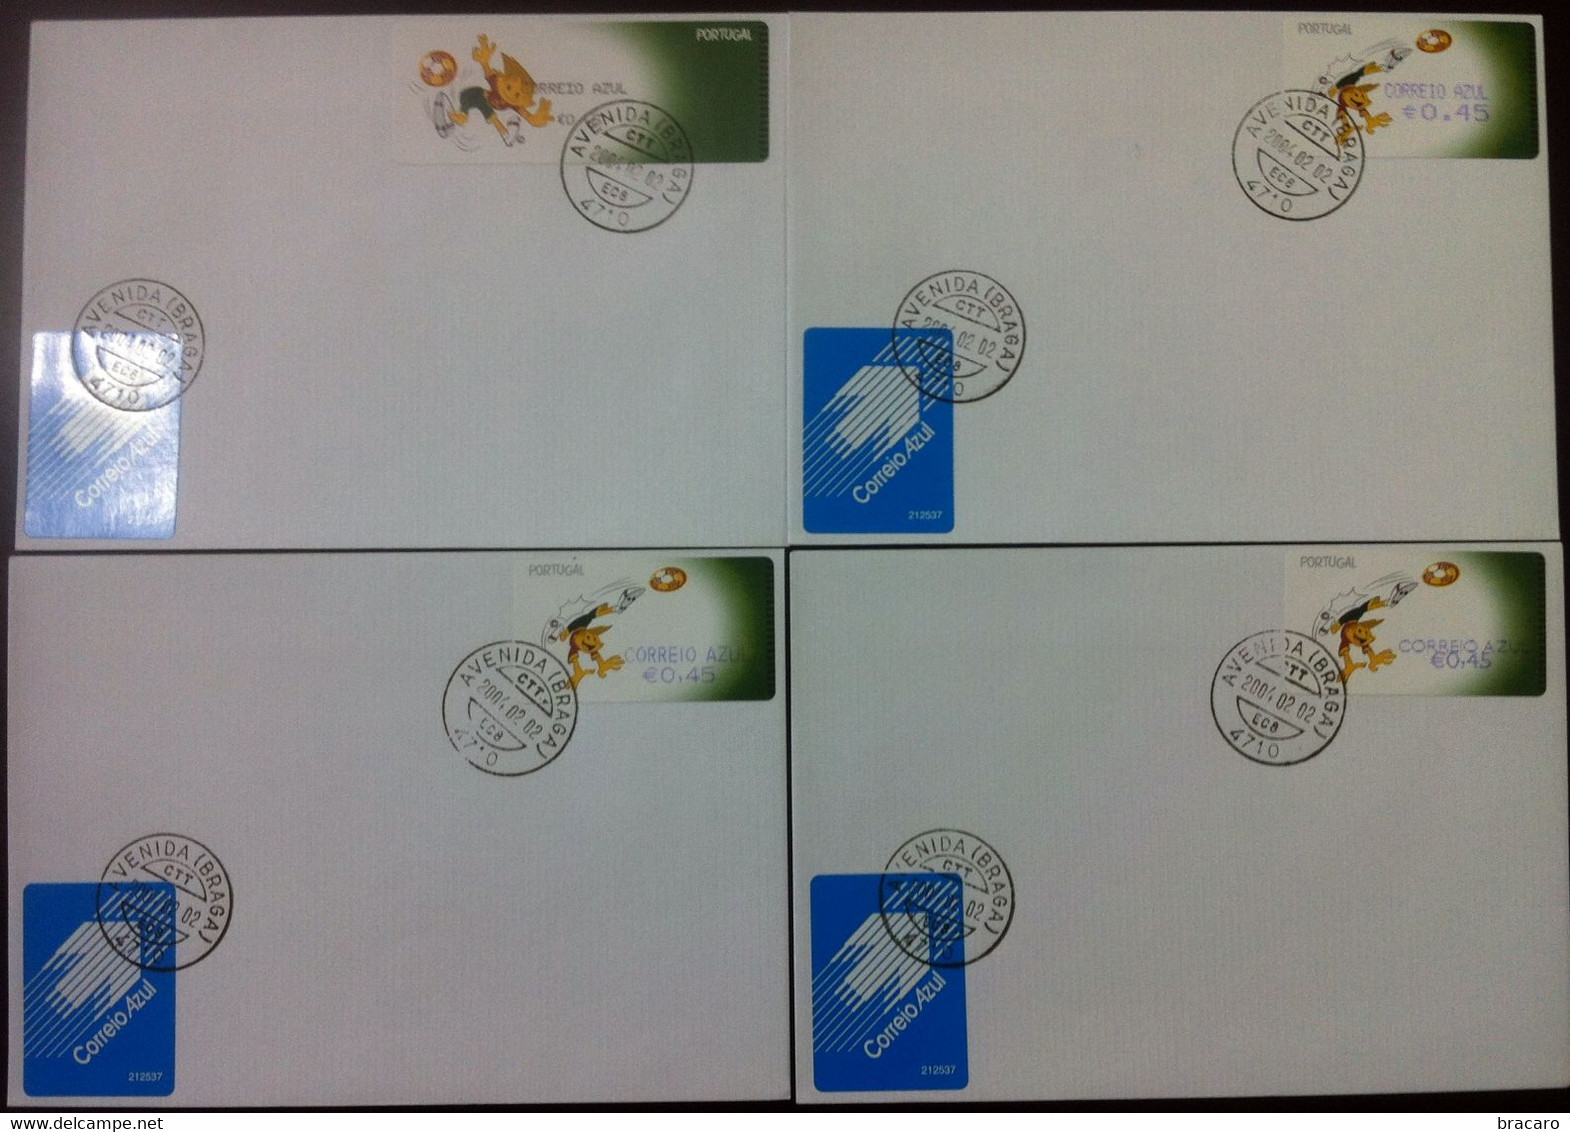 Portugal - ATM Machine Stamps - Cover X 8 - EURO'04 2004 (futebol / Football) - CORREIO AZUL, Cancel Braga - Franking Machines (EMA)